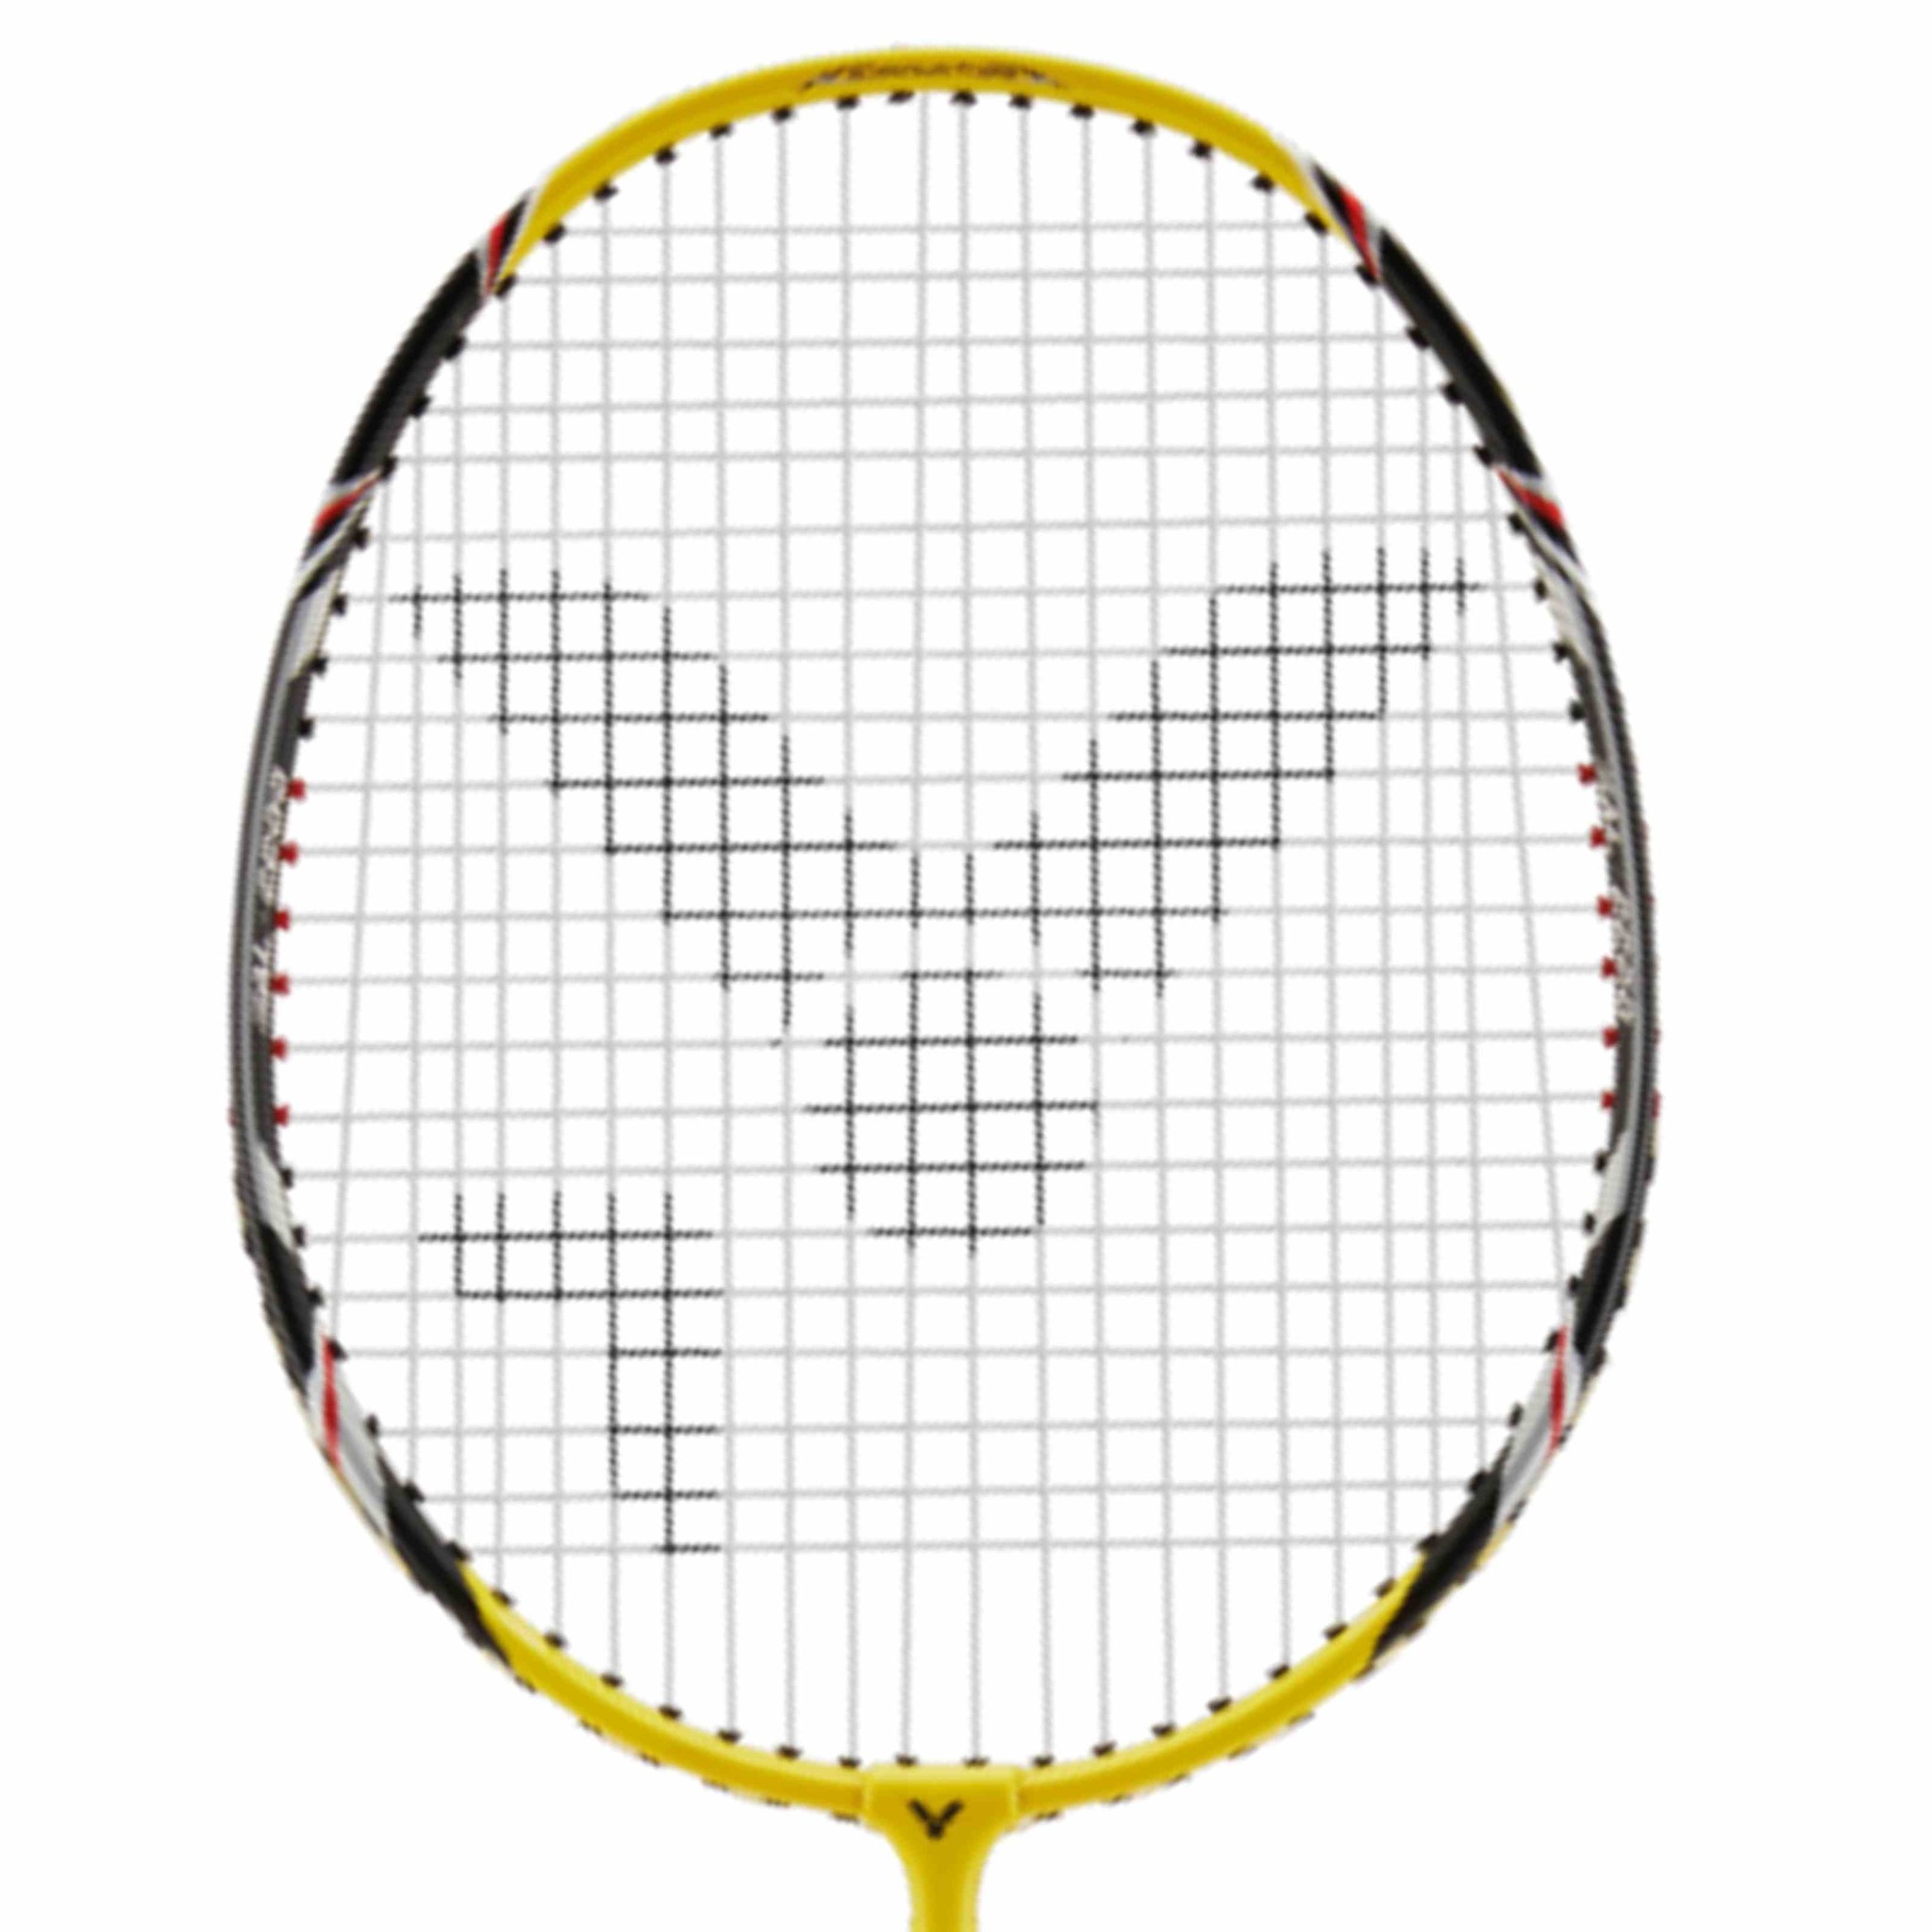 Habubu Marxisme Fobie Victor AL-2200 beginners badminton racket kopen? - KW FLEX racket  speciaalzaak